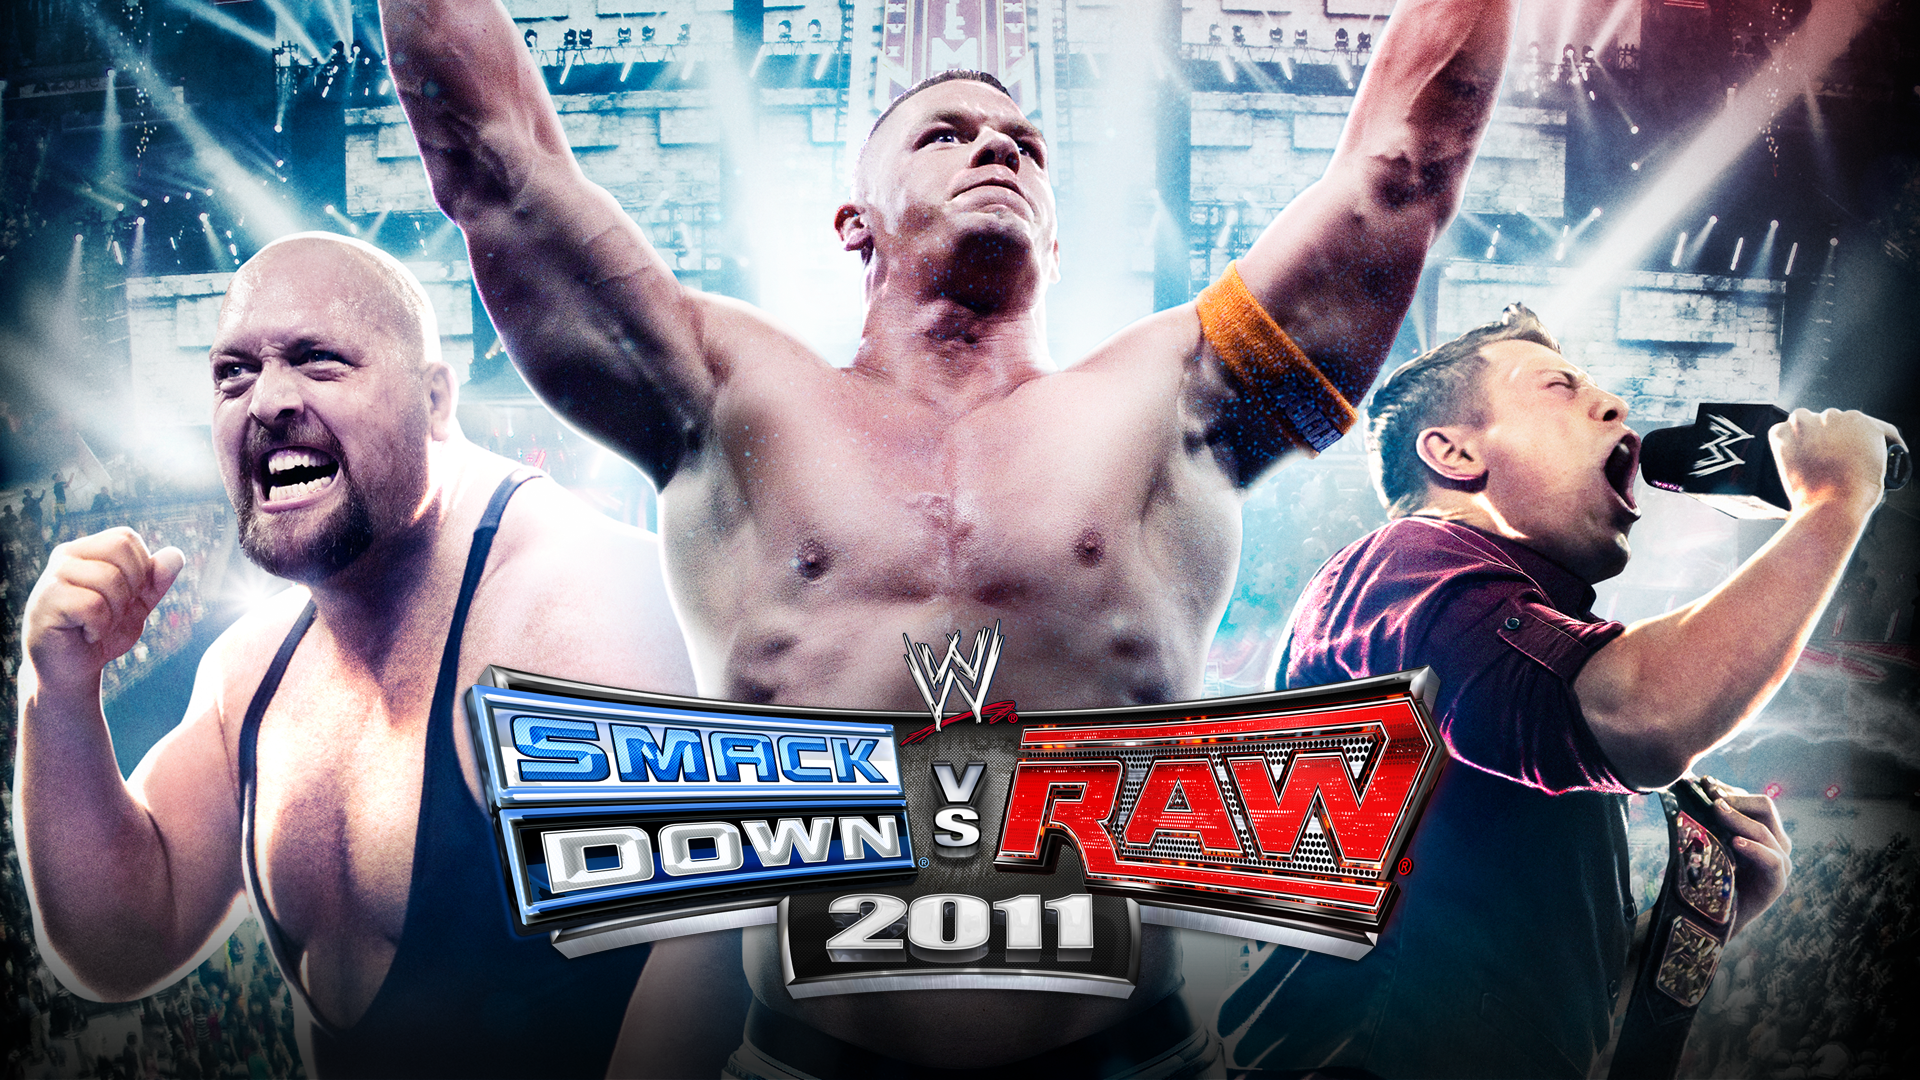 Smackdown Raw Smackdown Vs Raw 2011 John Cena Big Show The Miz WWE Video Games Wrestling 1920x1080